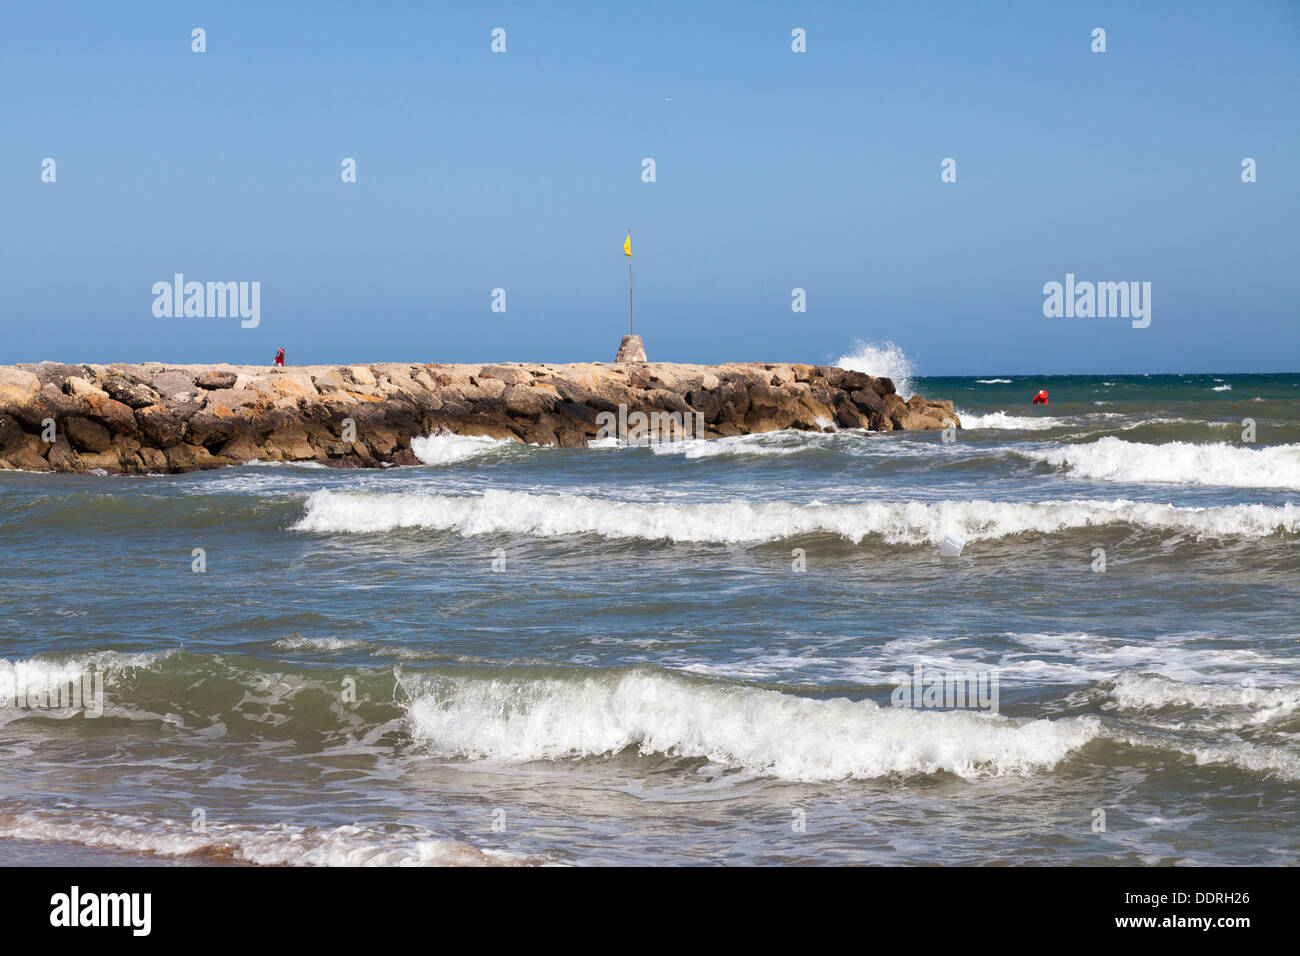 Sea wall stone groyne with breaking waves Stock Photo